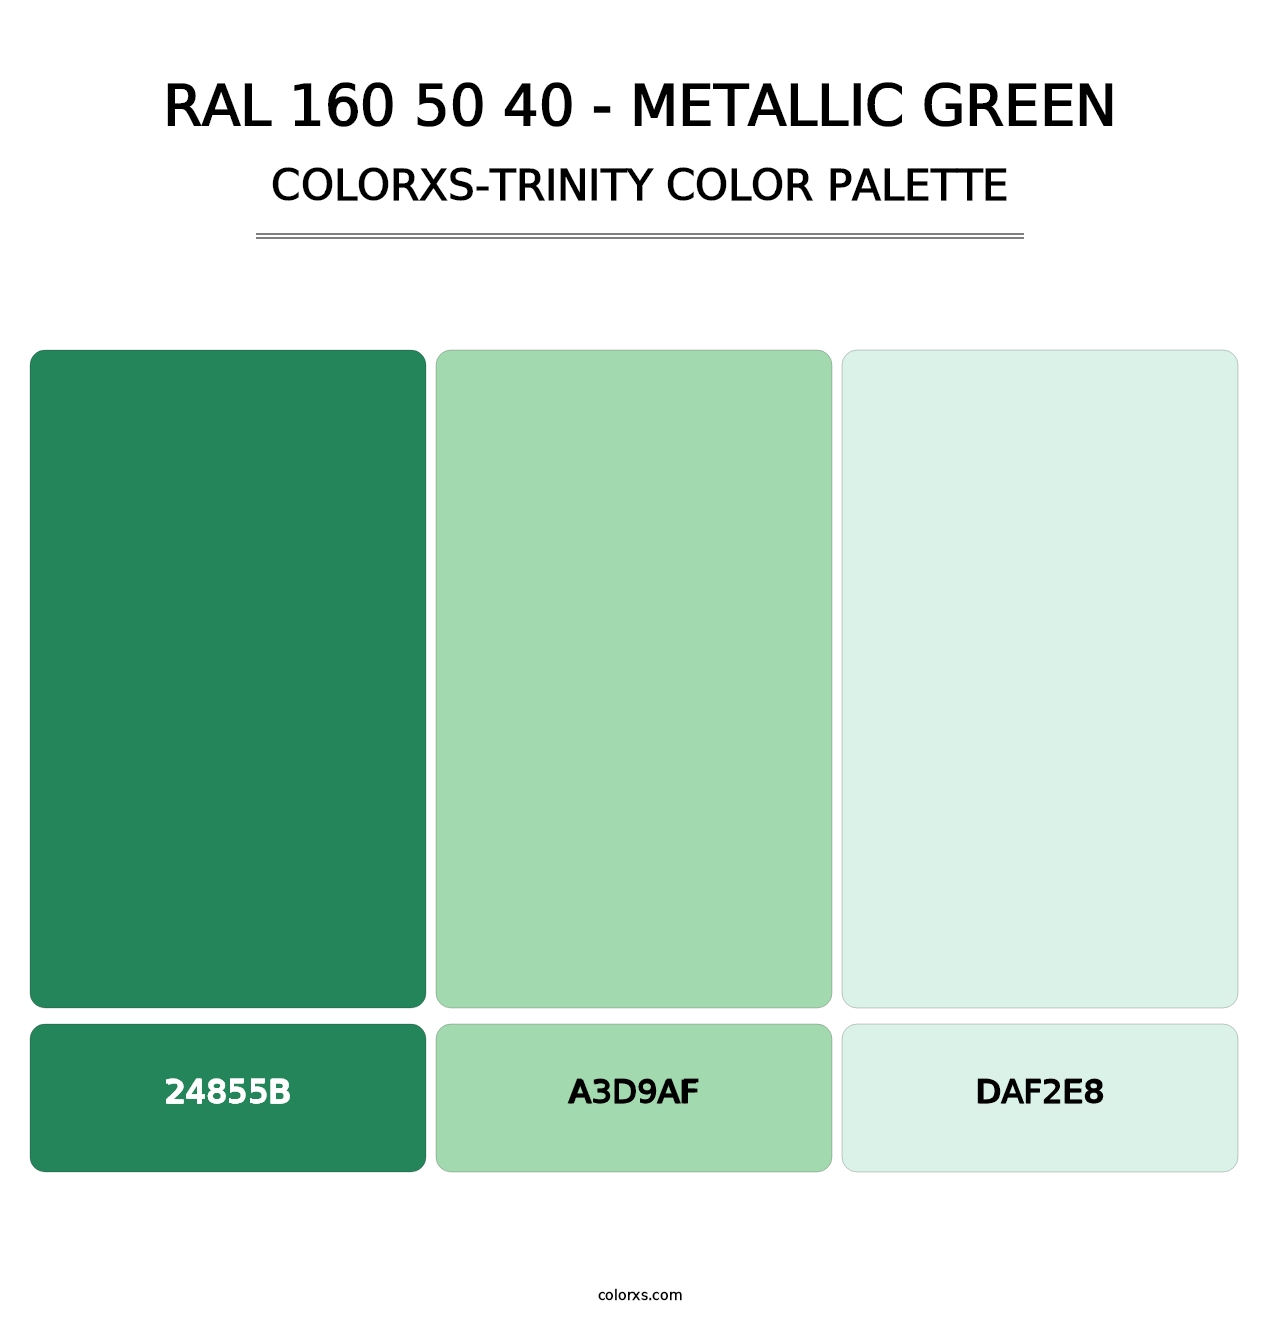 RAL 160 50 40 - Metallic Green - Colorxs Trinity Palette